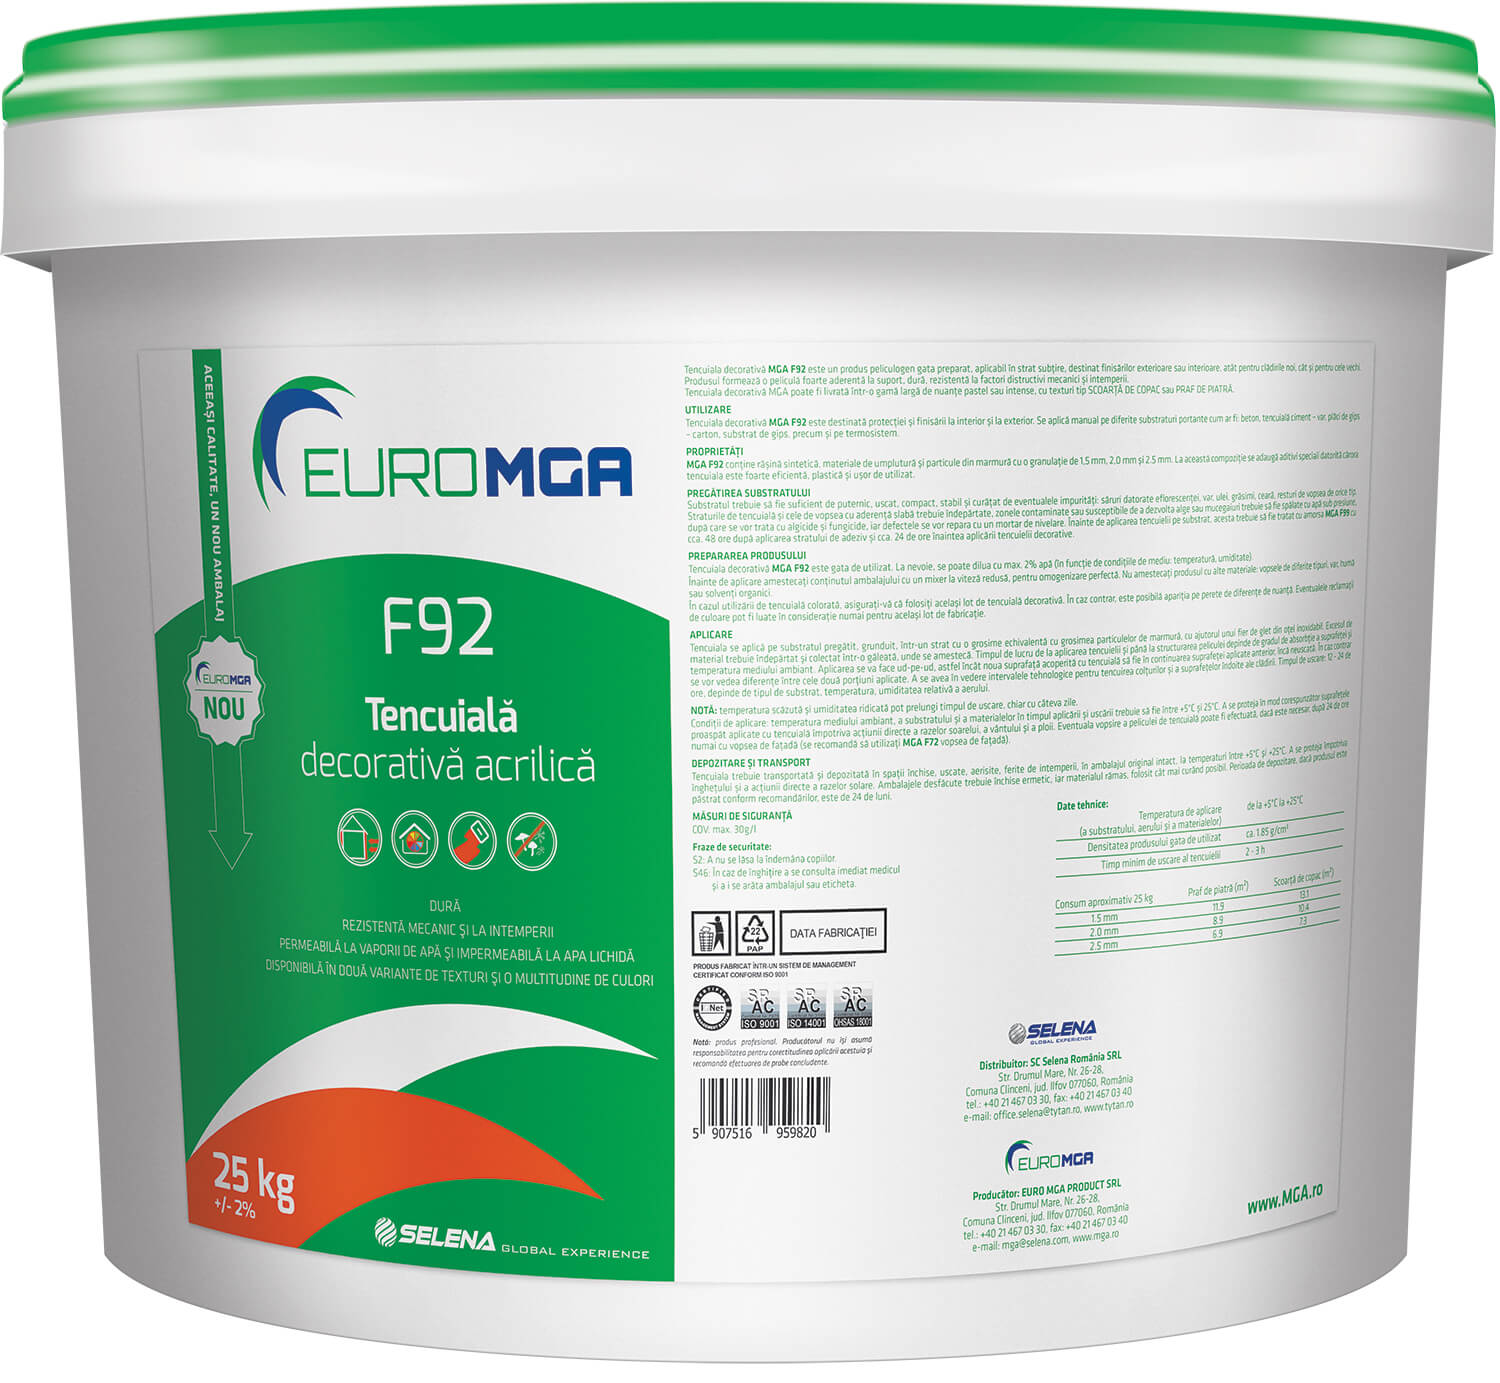 Decorative plasters - Acrylic decorative plaster F92 EuroMGA B15 25KG, https:maxbau.ro